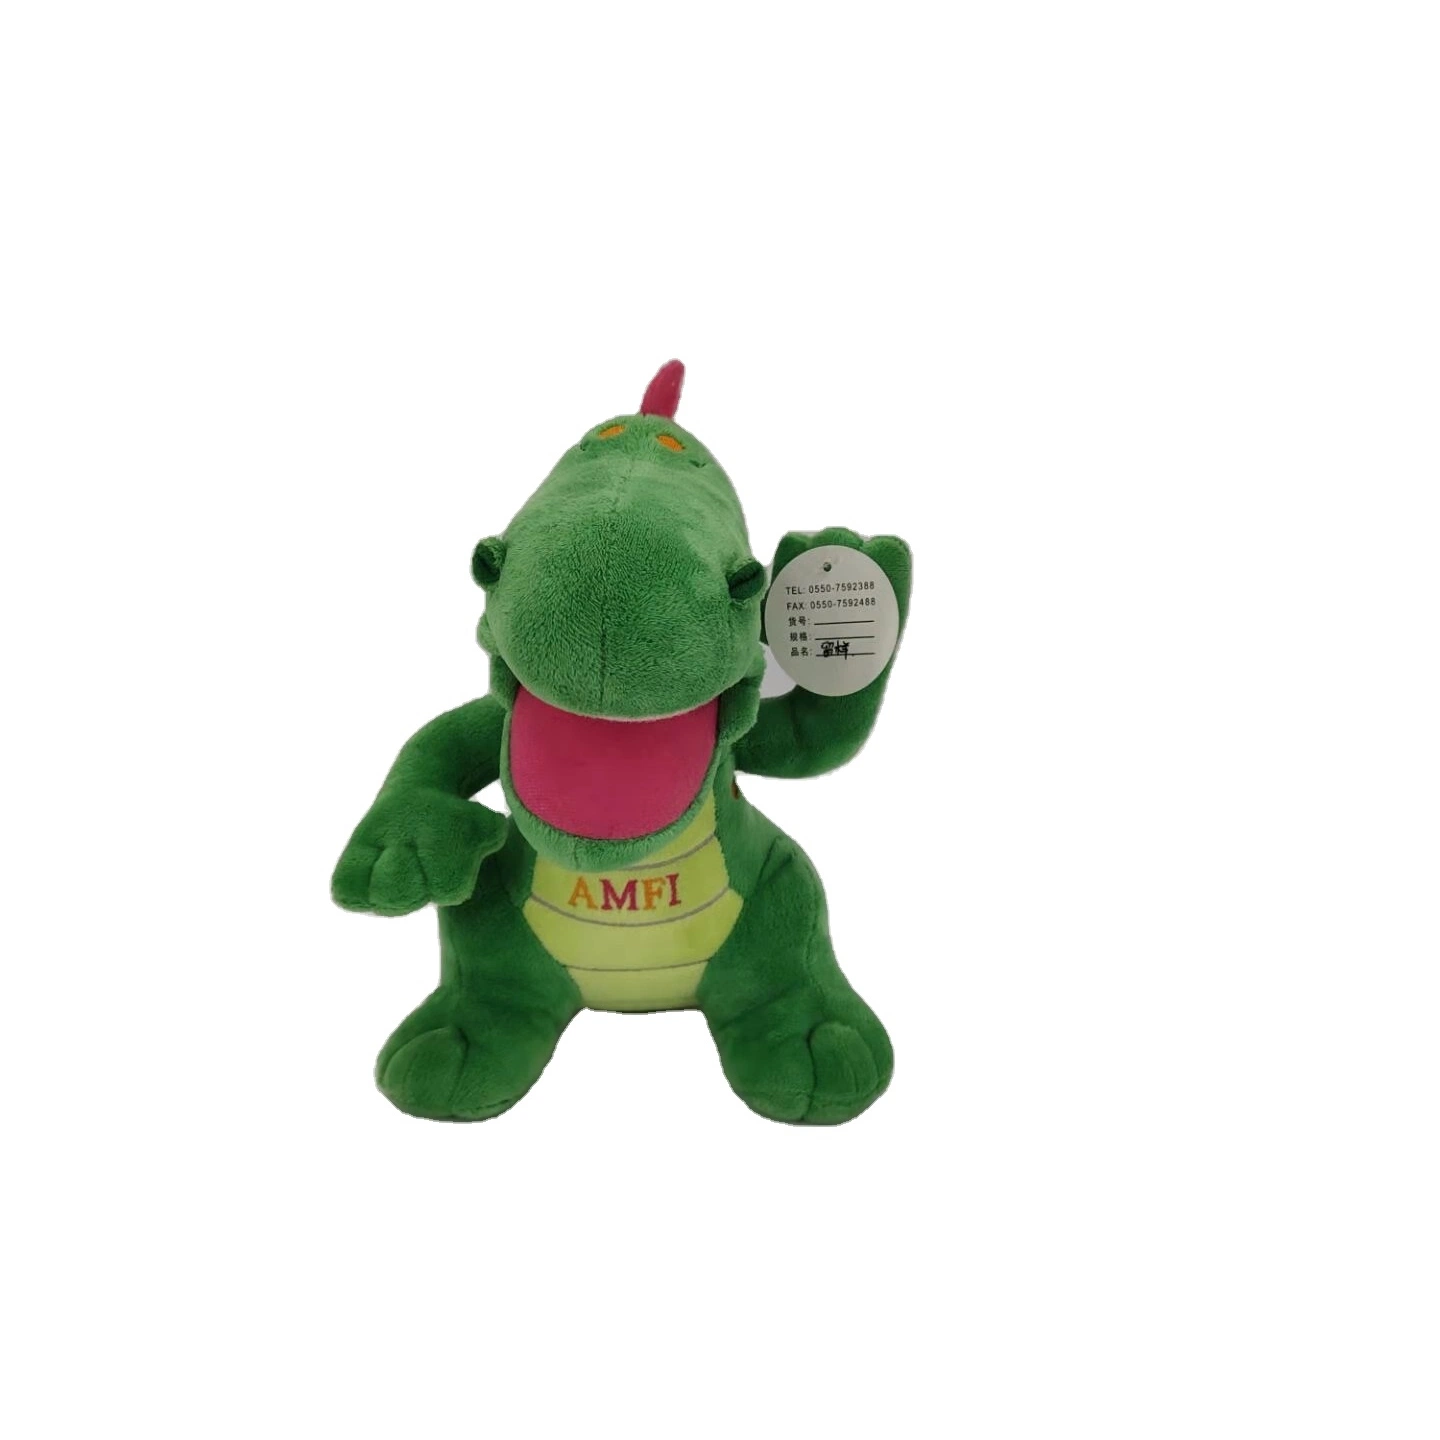 Mini Plush Smile Cloth Animal Stuffed Dinosaur Toy